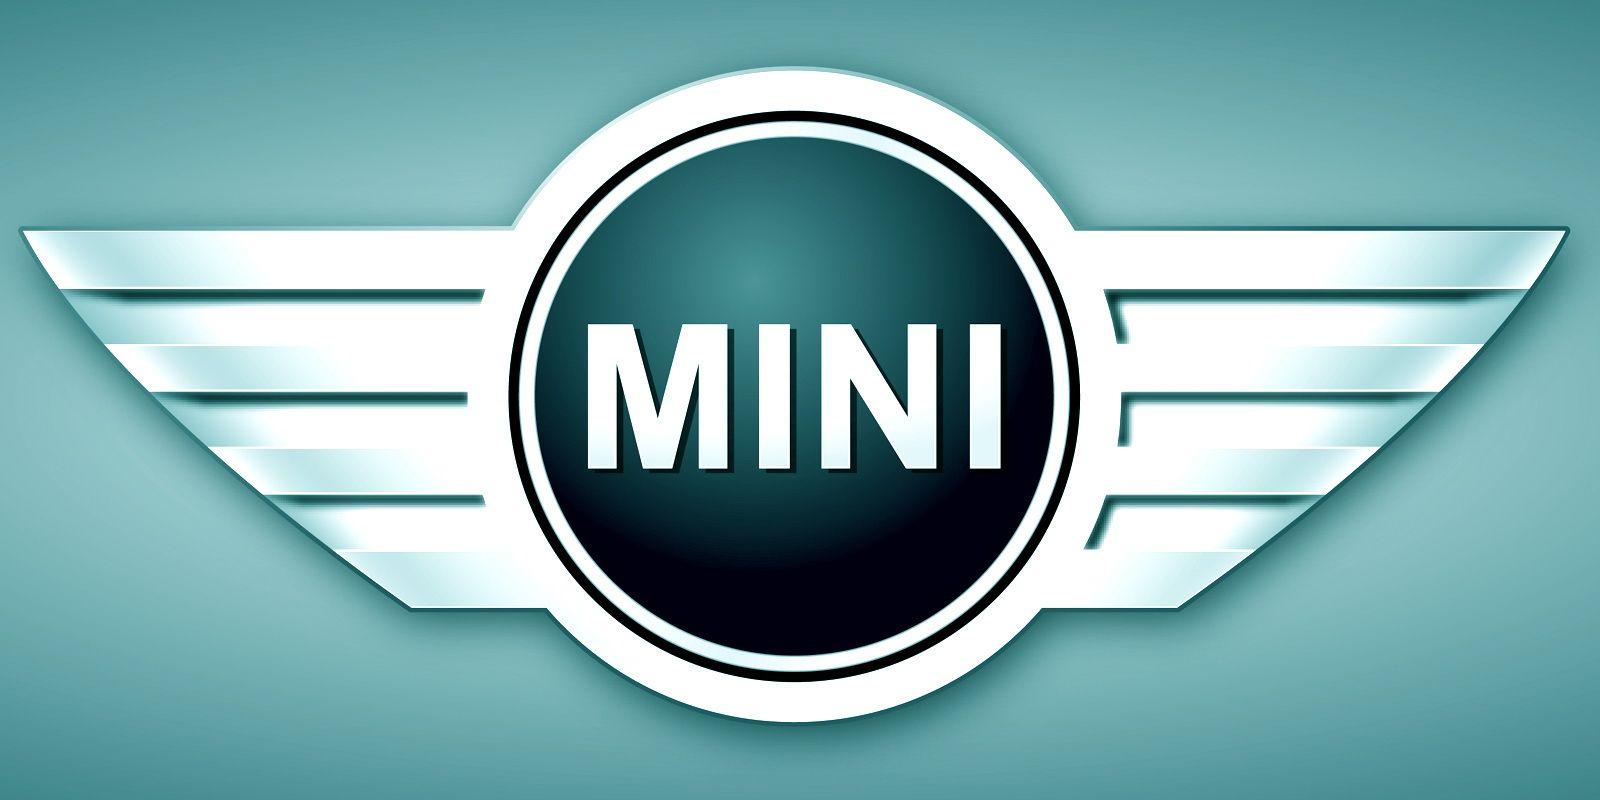 Blue Silver Car Logo - Mini Cooper Logo, Mini Car Symbol Meaning and History | Car Brand ...